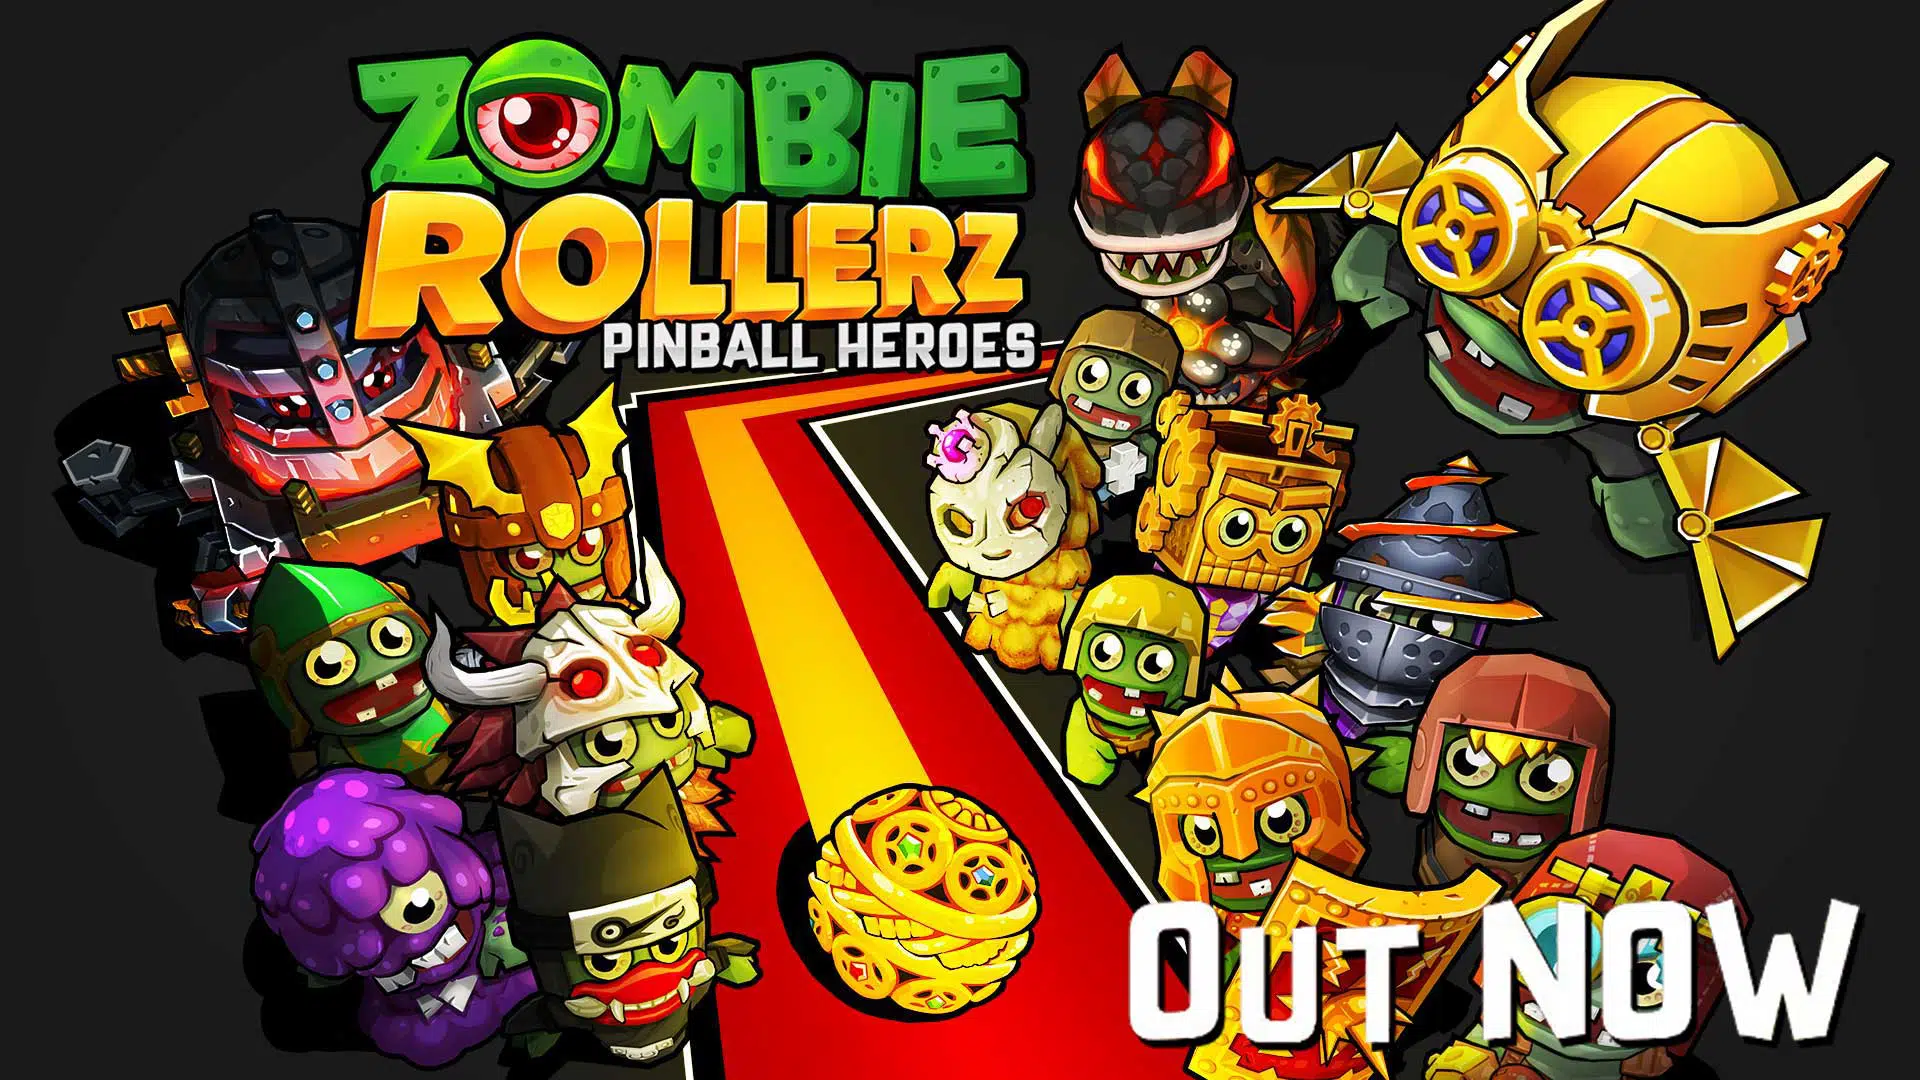 Zombie Rollerz Pinball Heroes release